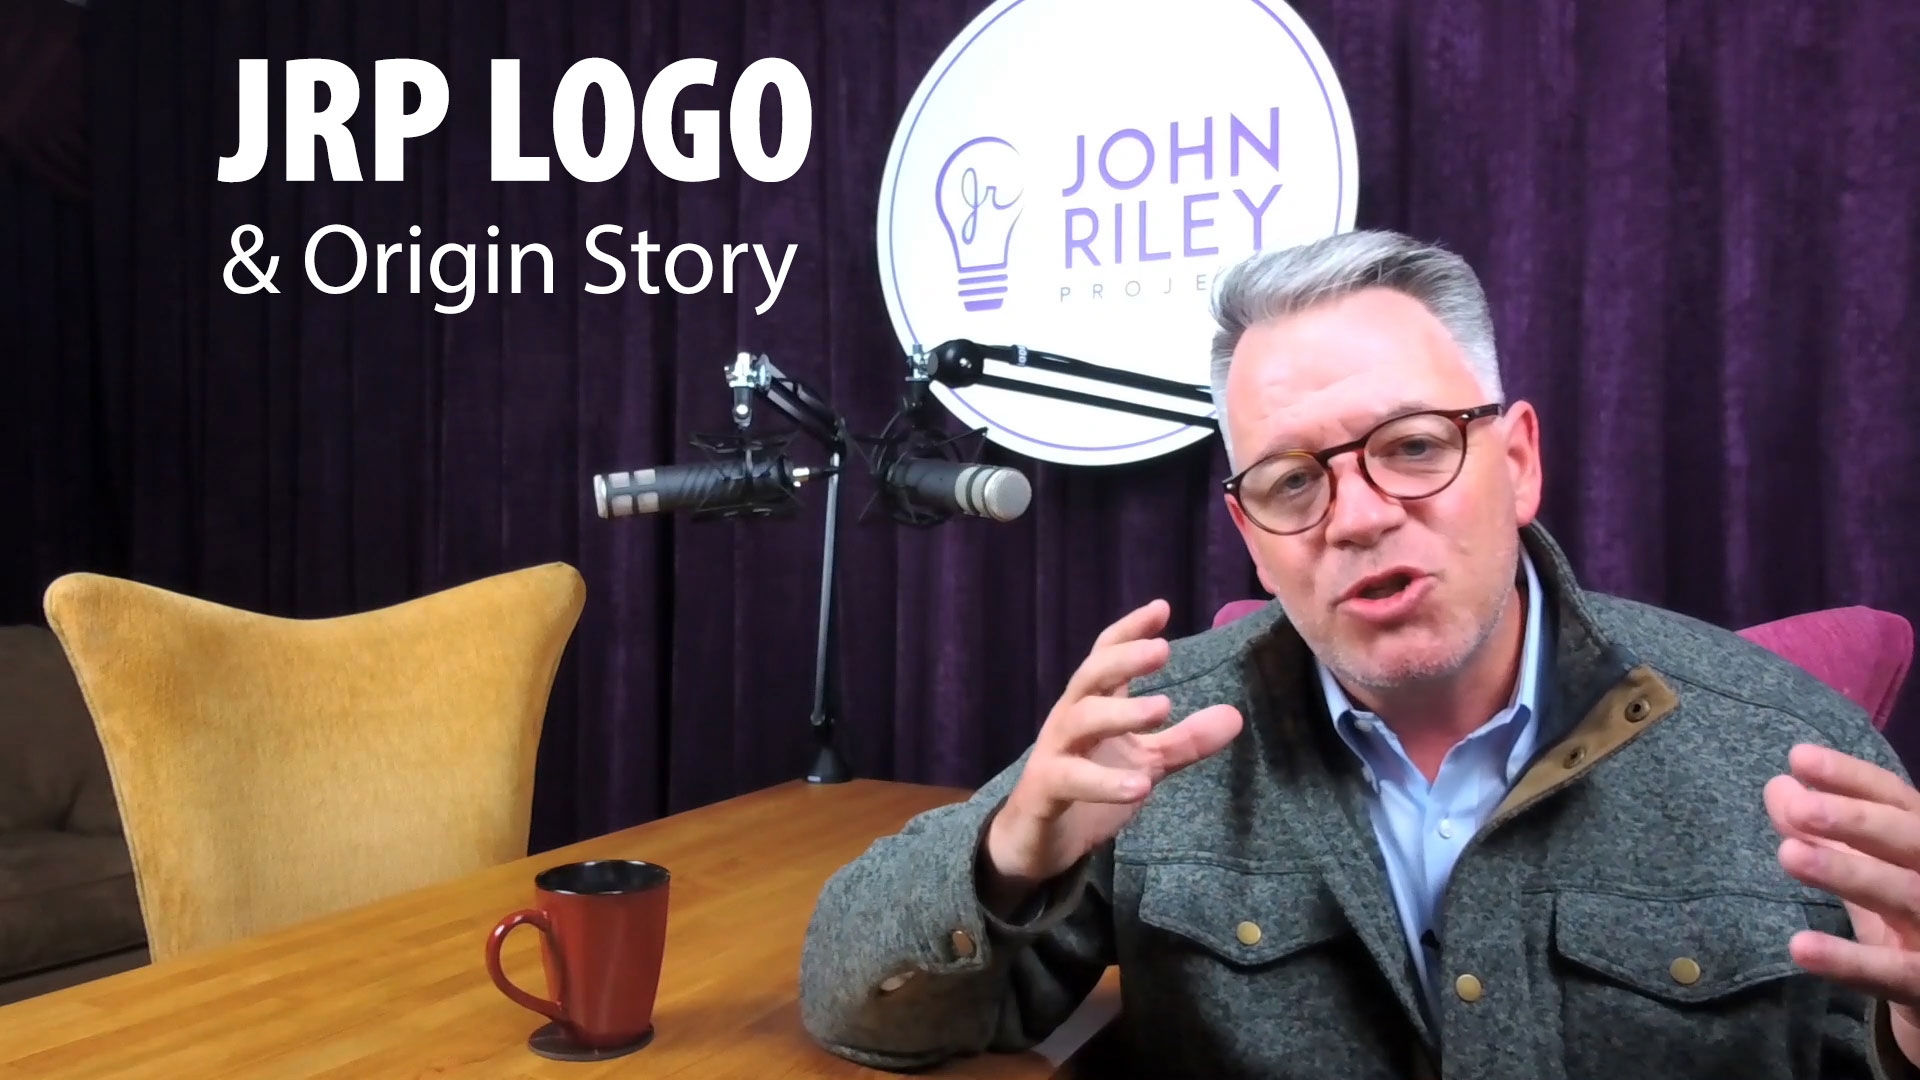 JRP, John Riley Project, logo, origin story, JRP0240